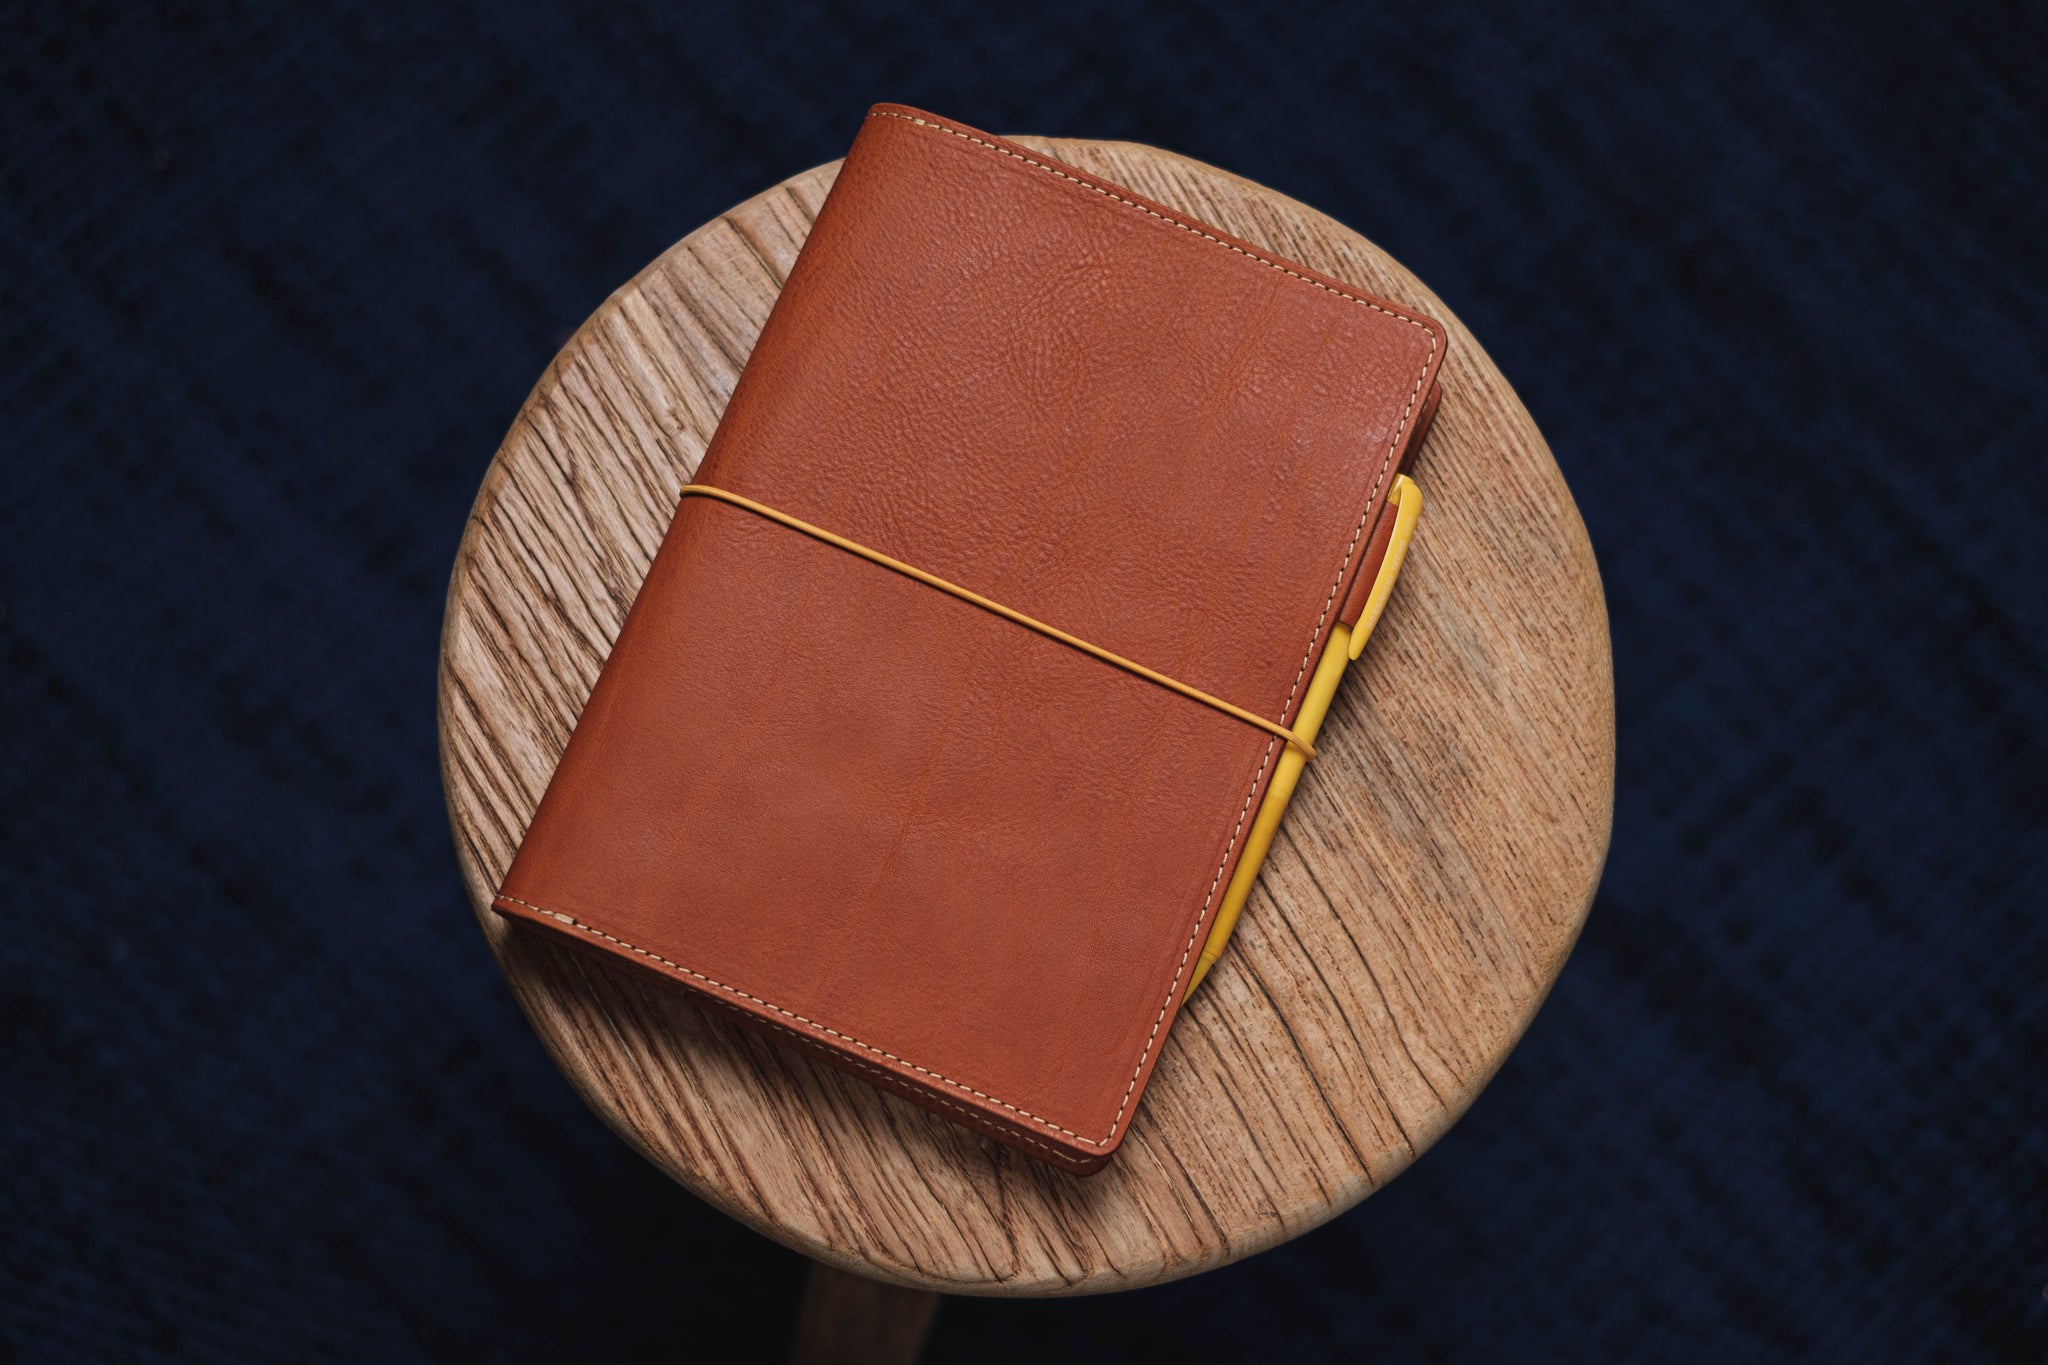 6 COLORS - A5/Hobonichi/Midori MD Orange-brown Elastic Closure Pebbled Leather Notebook Cover